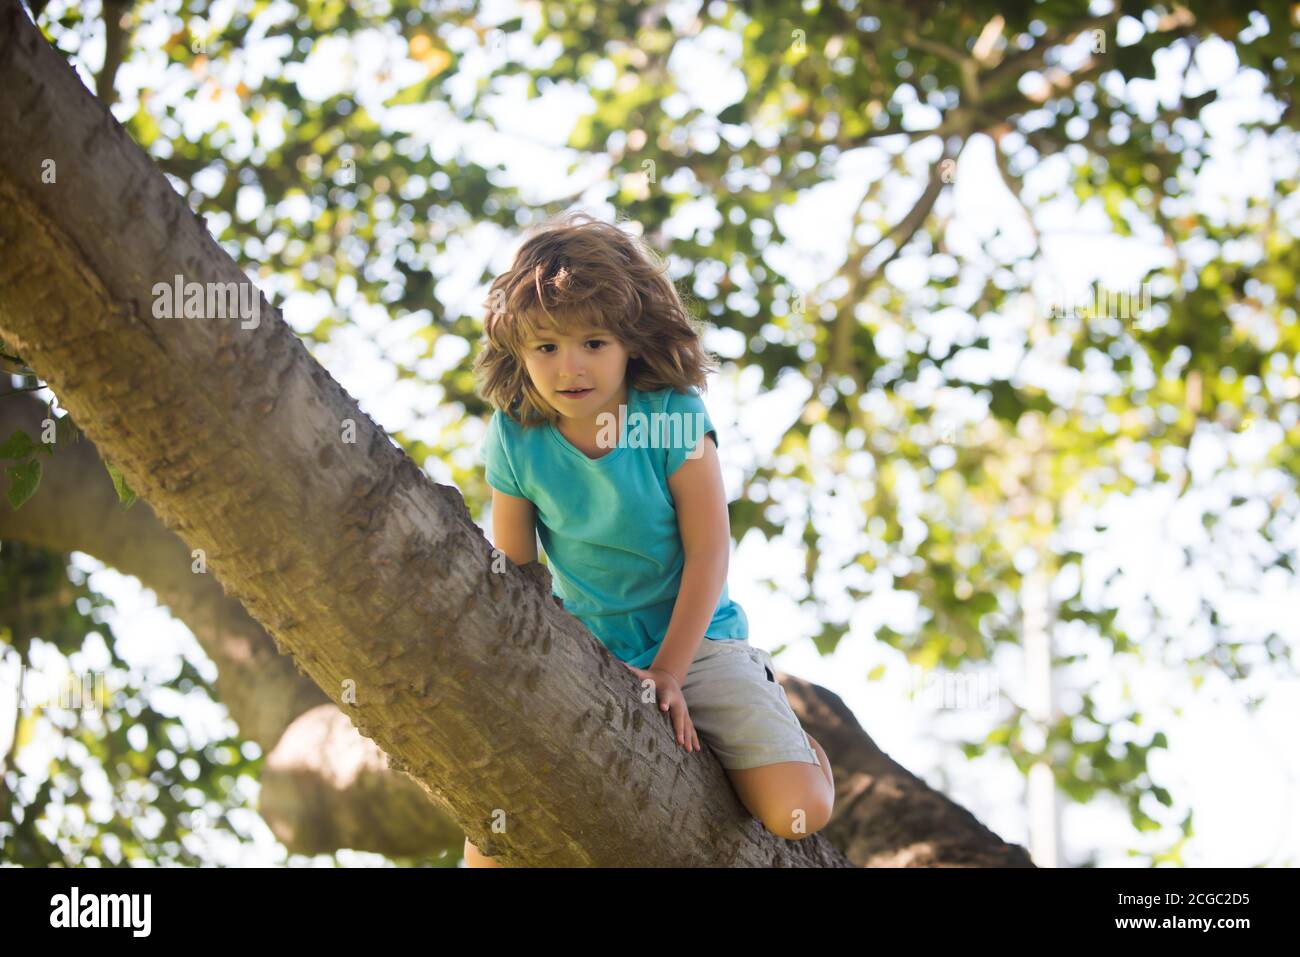 Kids climbing trees. Boy Child climb high up in a tree. Stock Photo